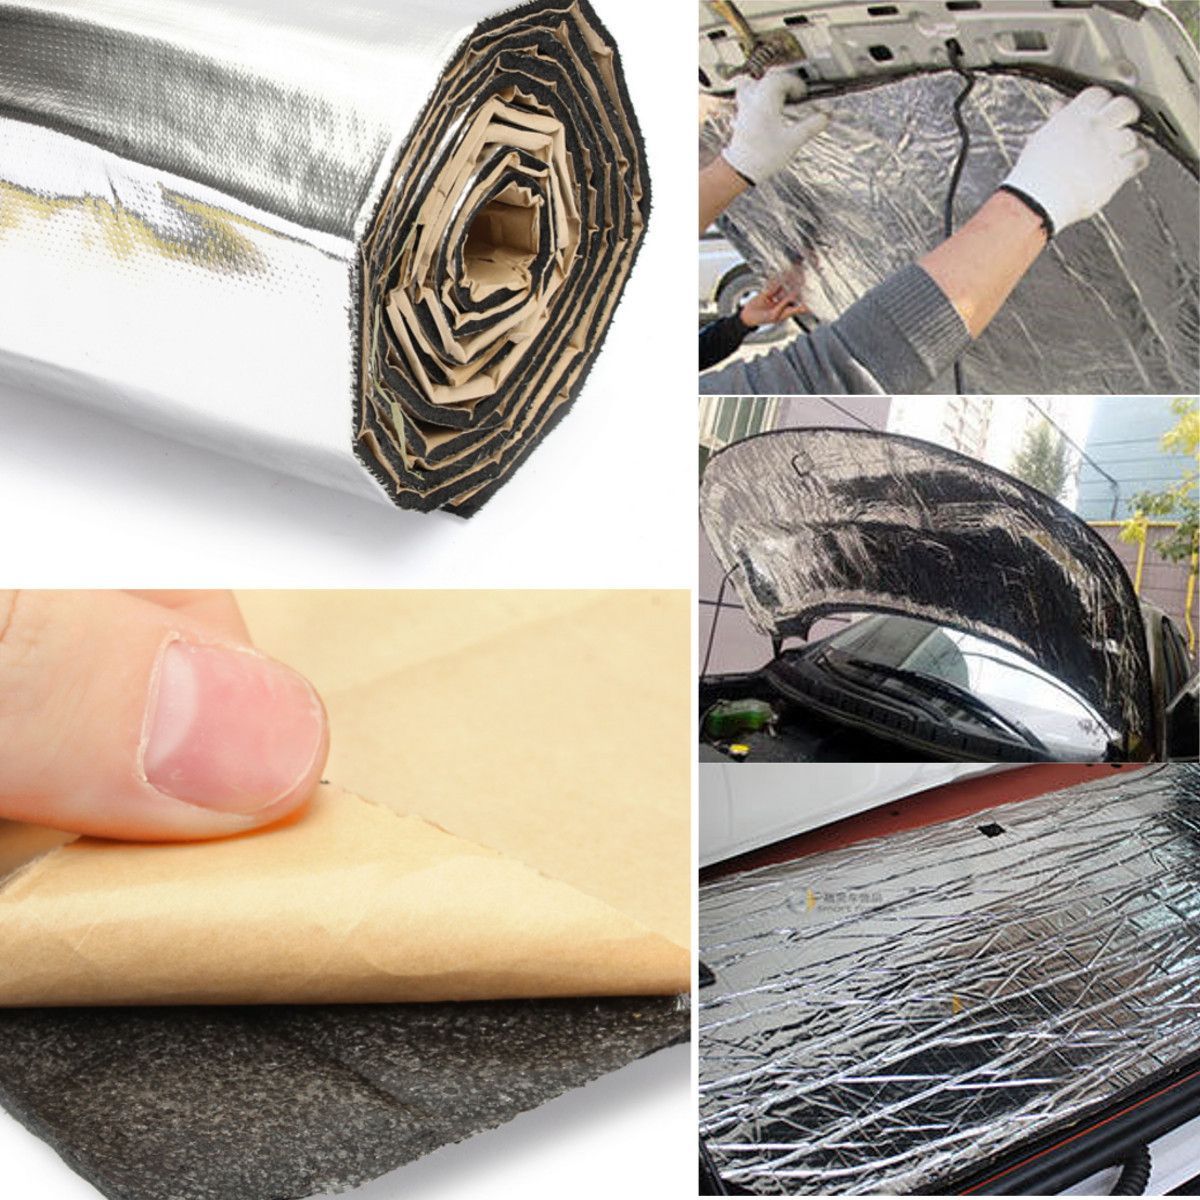 7mm-Car-Sound-Deadener-Heat-Shield-Insulation-Aluminum-Foil-Material-Sound-Insulation-Cotton-1298866